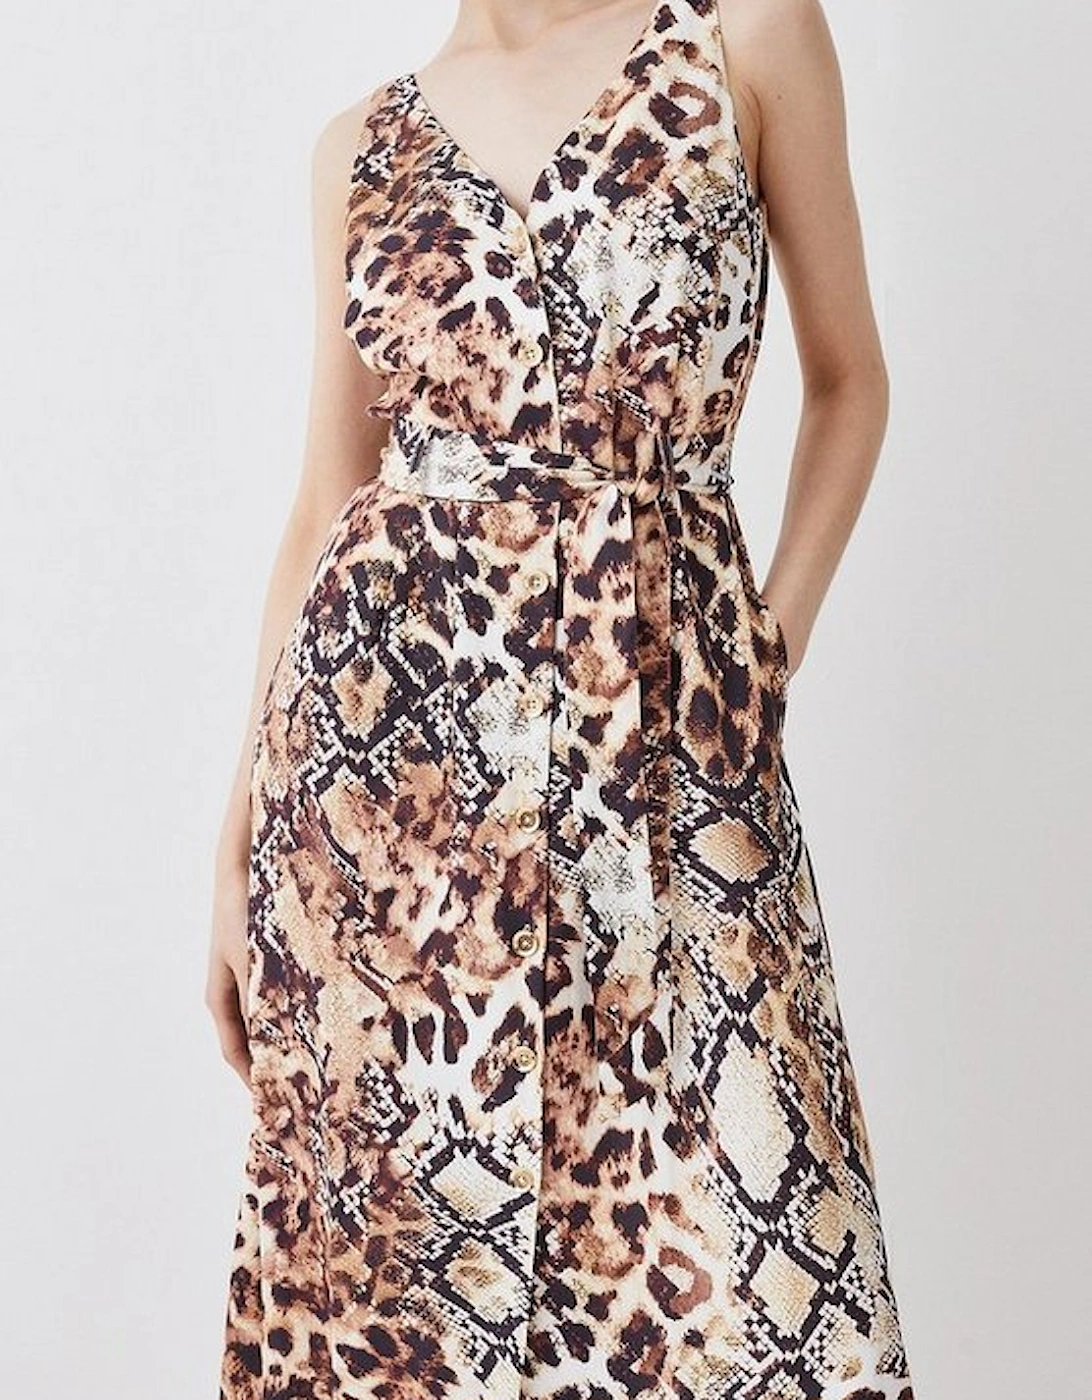 Animal Print Belted Premium Linen Woven Midi Dress